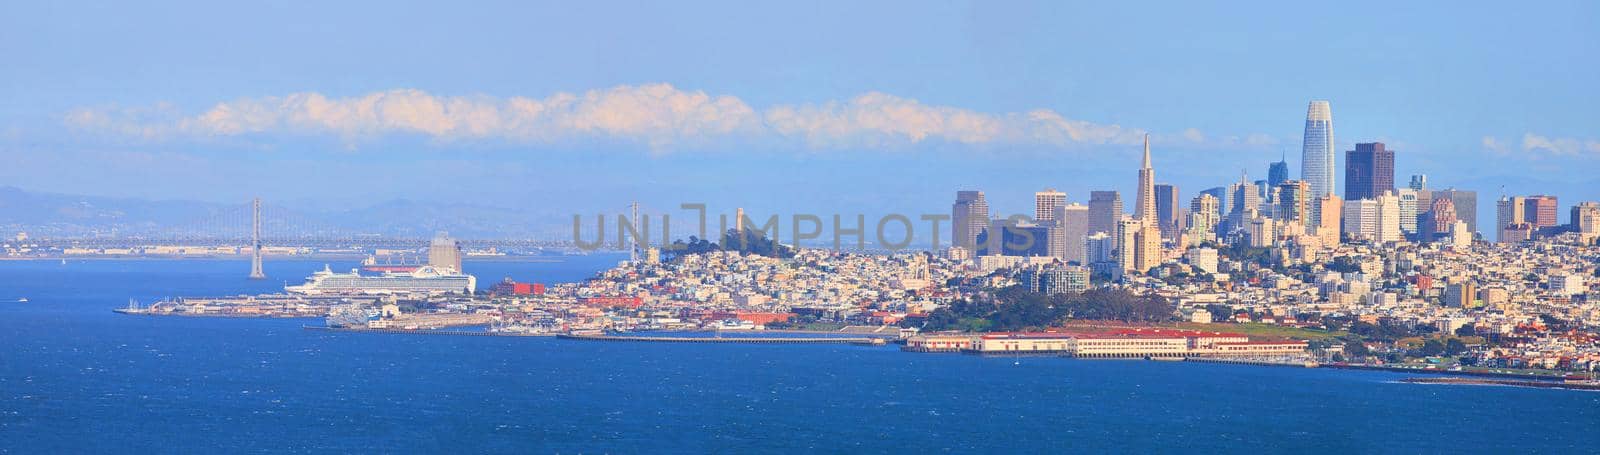 Panorama of stunning San Francisco, California skyline by njproductions